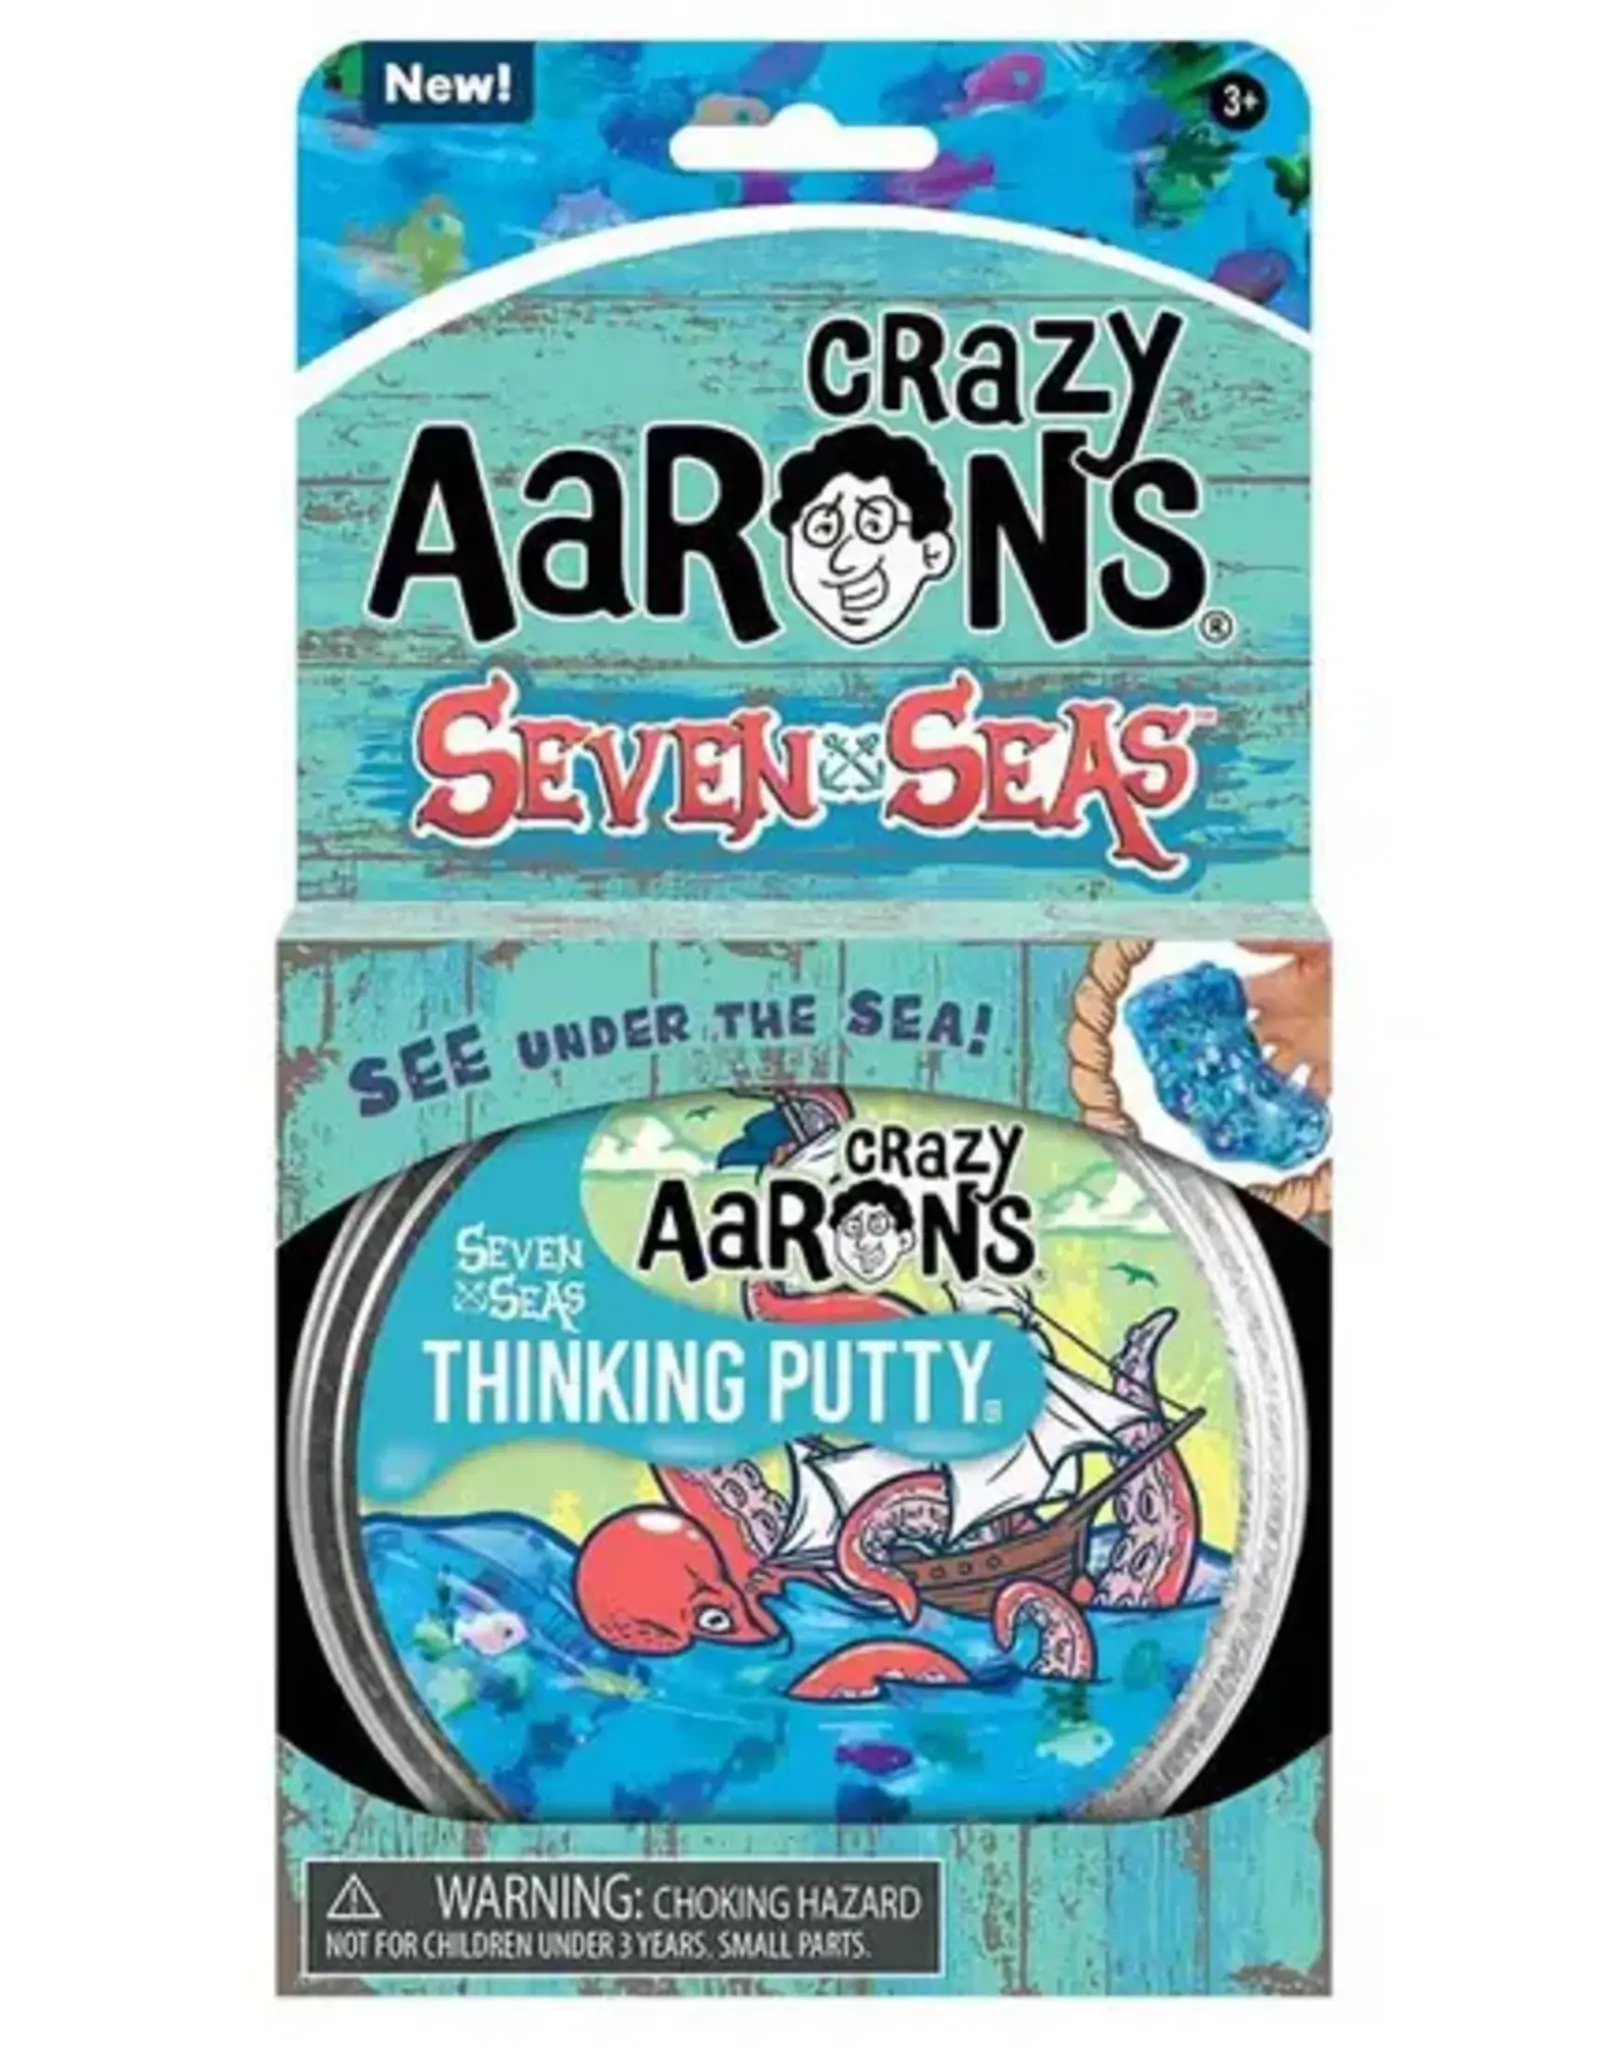 CRAZY AARON SEVEN SEAS